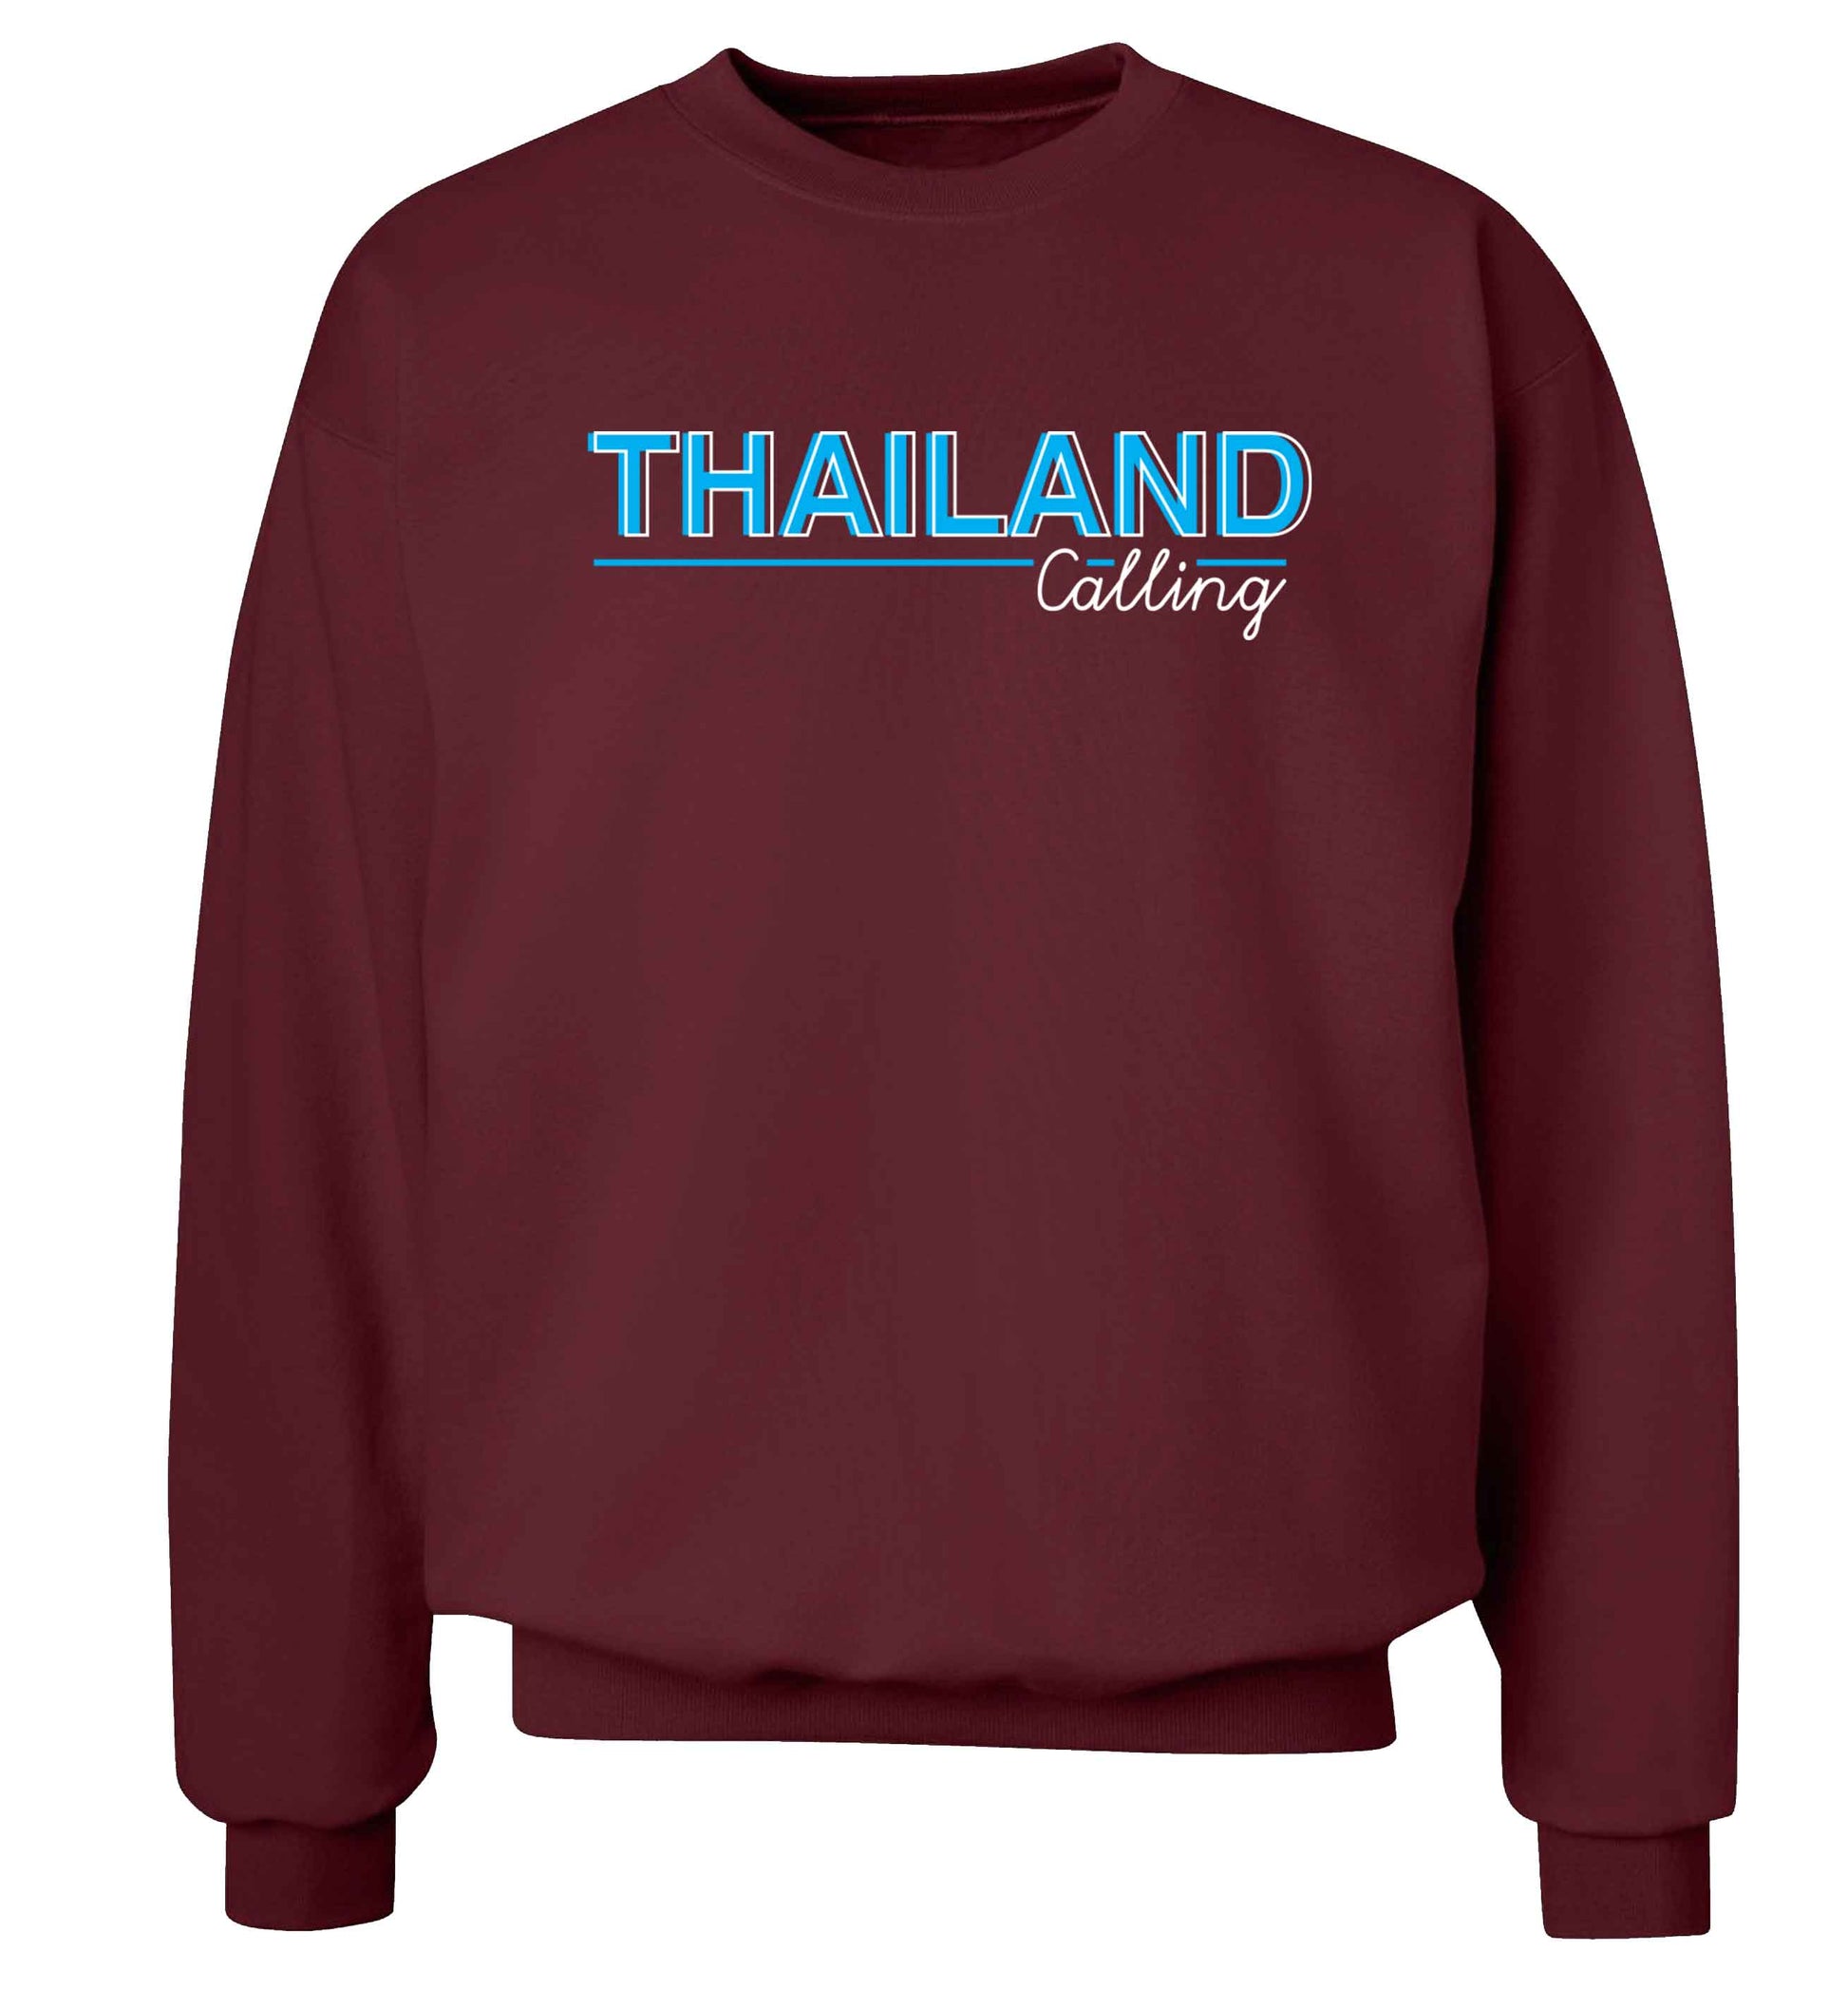 Thailand calling Adult's unisex maroon Sweater 2XL